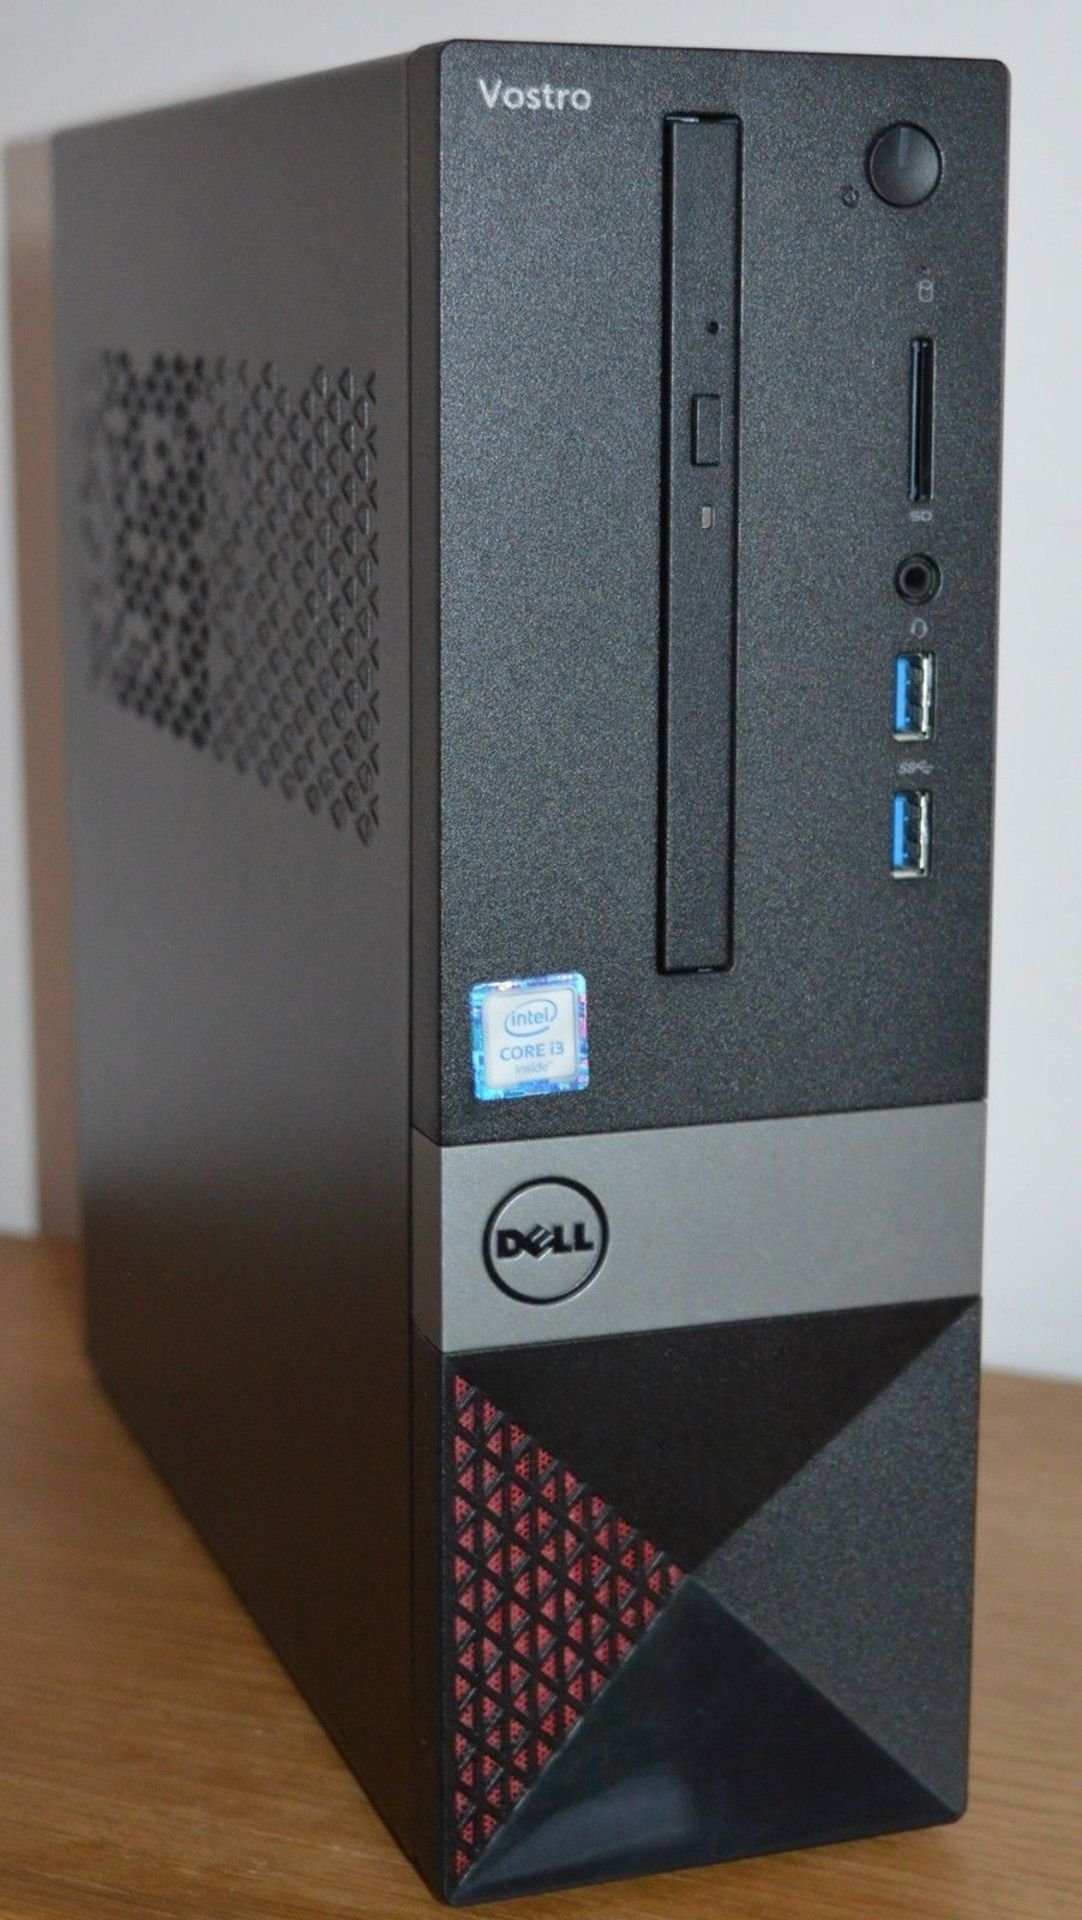 1 x Dell Vostro 3250 Small Form Factor PC - Features Intel Skylake i3-6100 3.7ghz Processor, 8gb